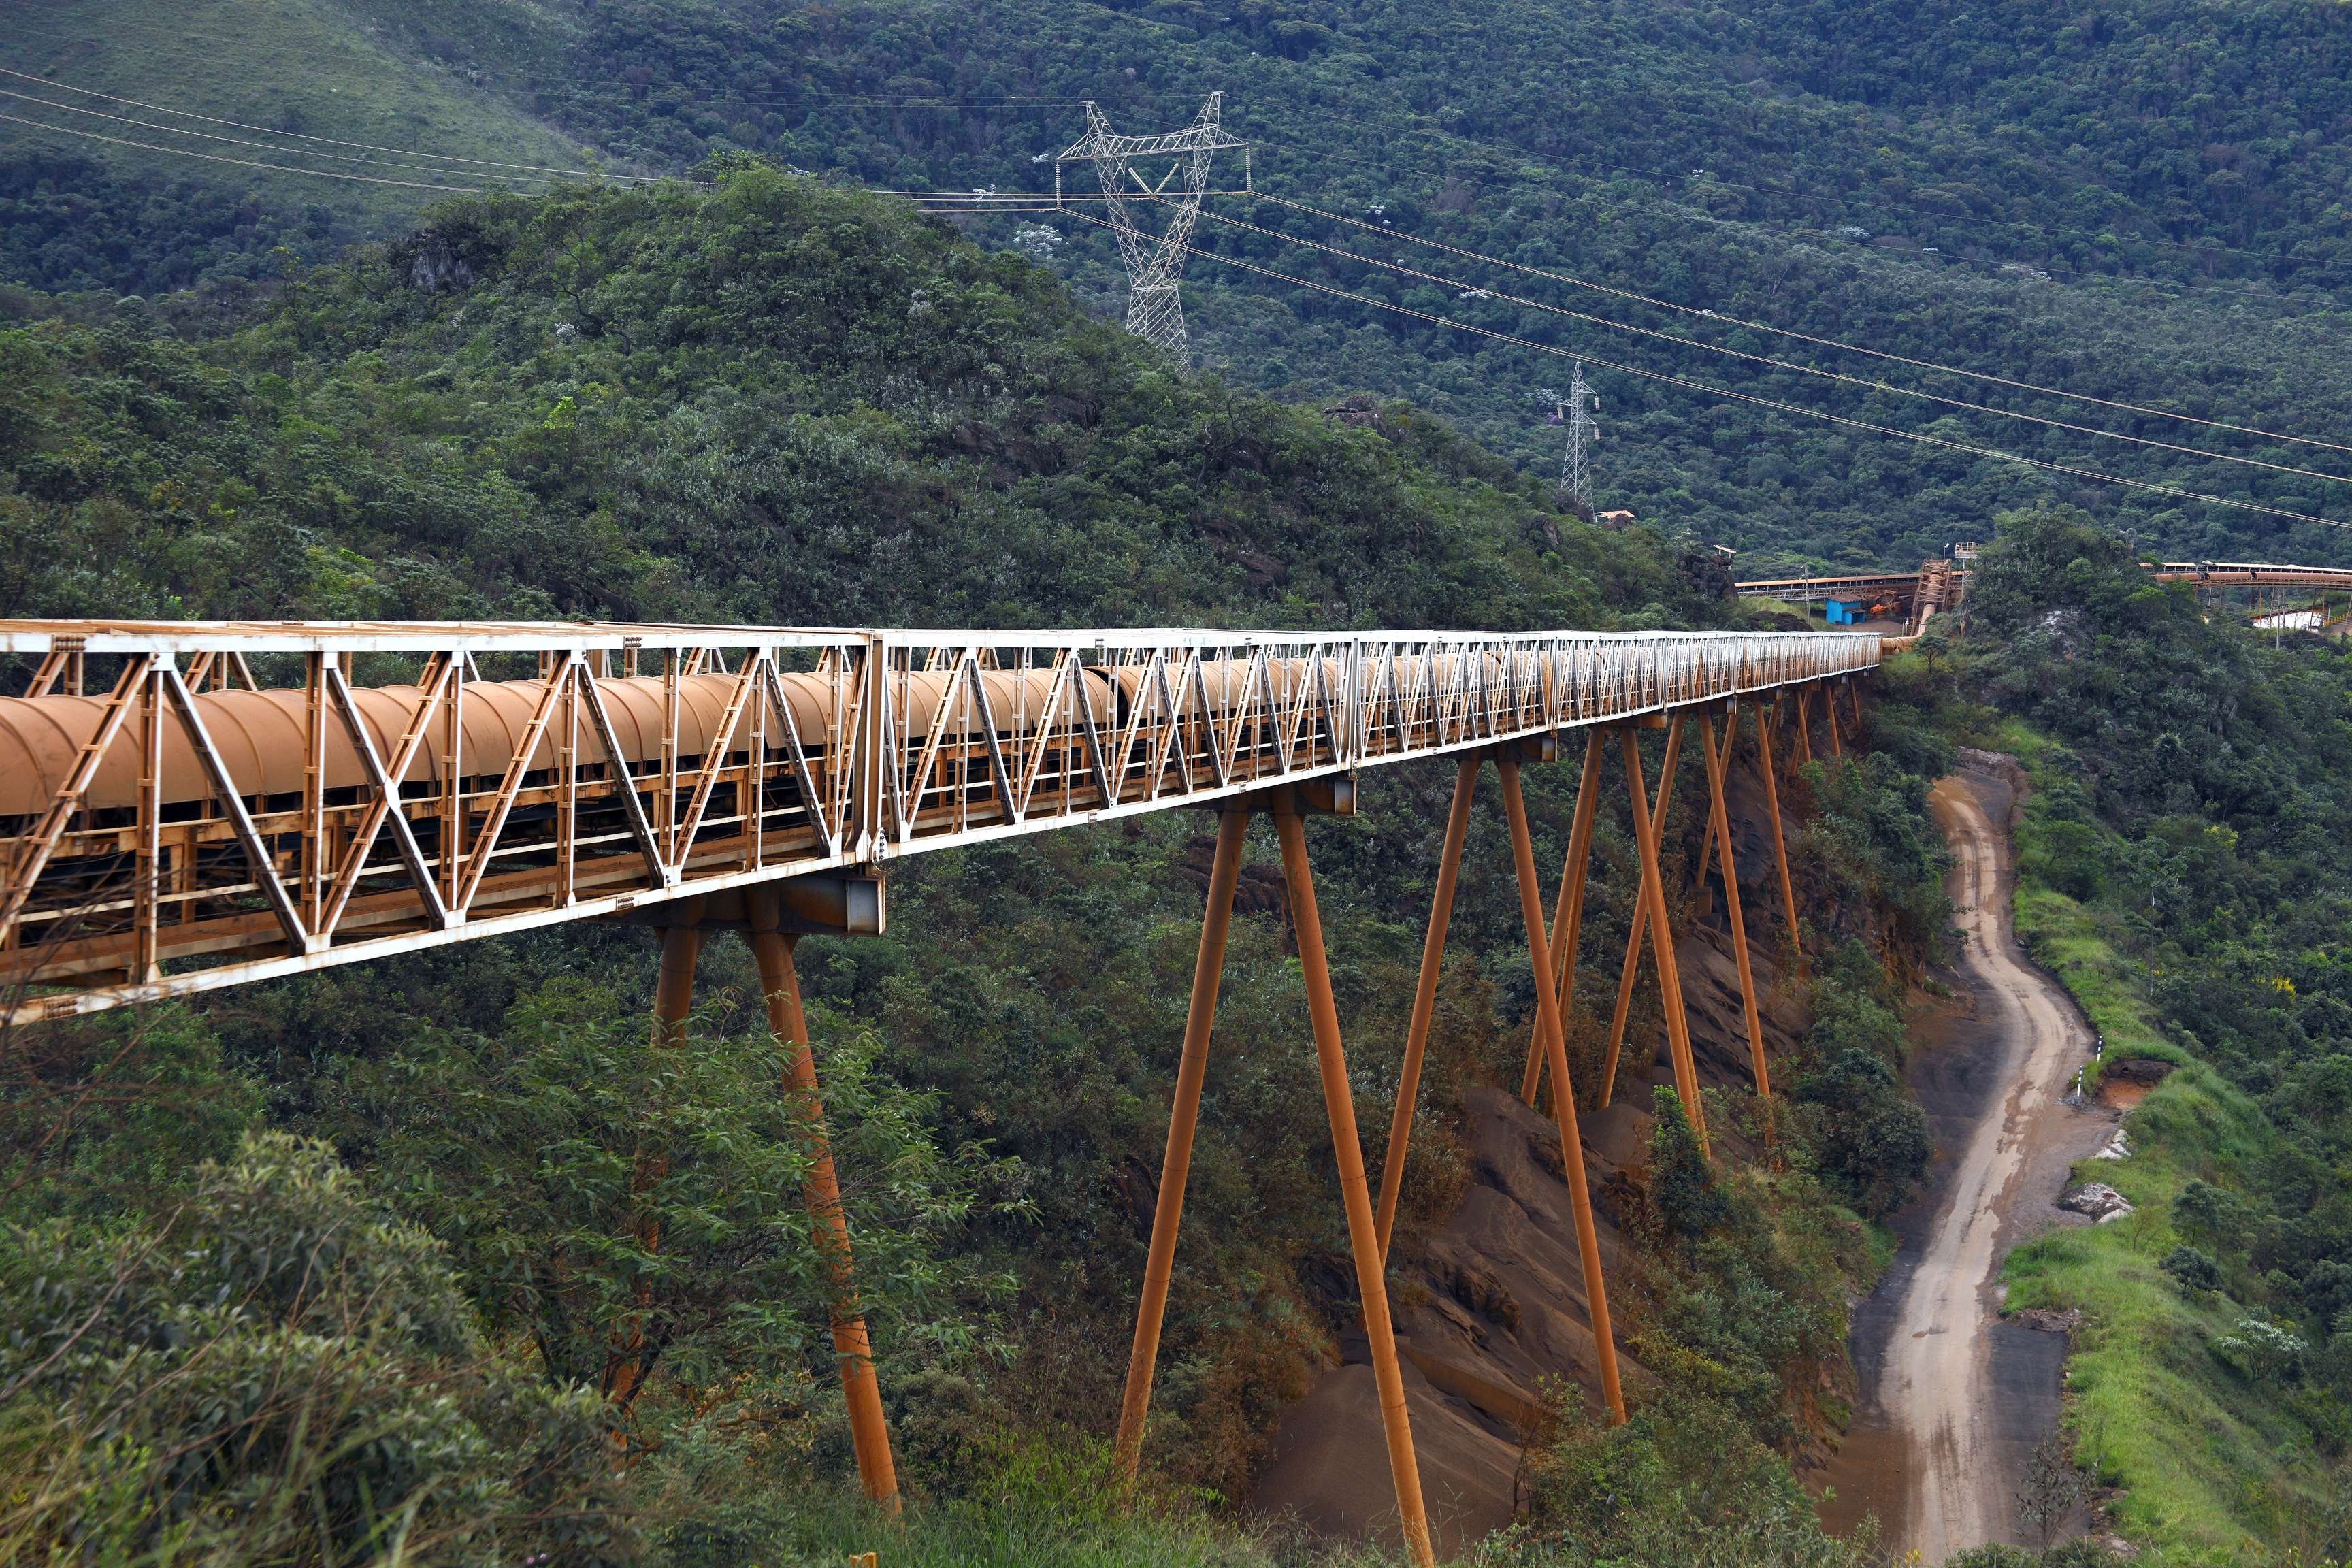 Pipeline leads over a high bridge in mountainous terrain.